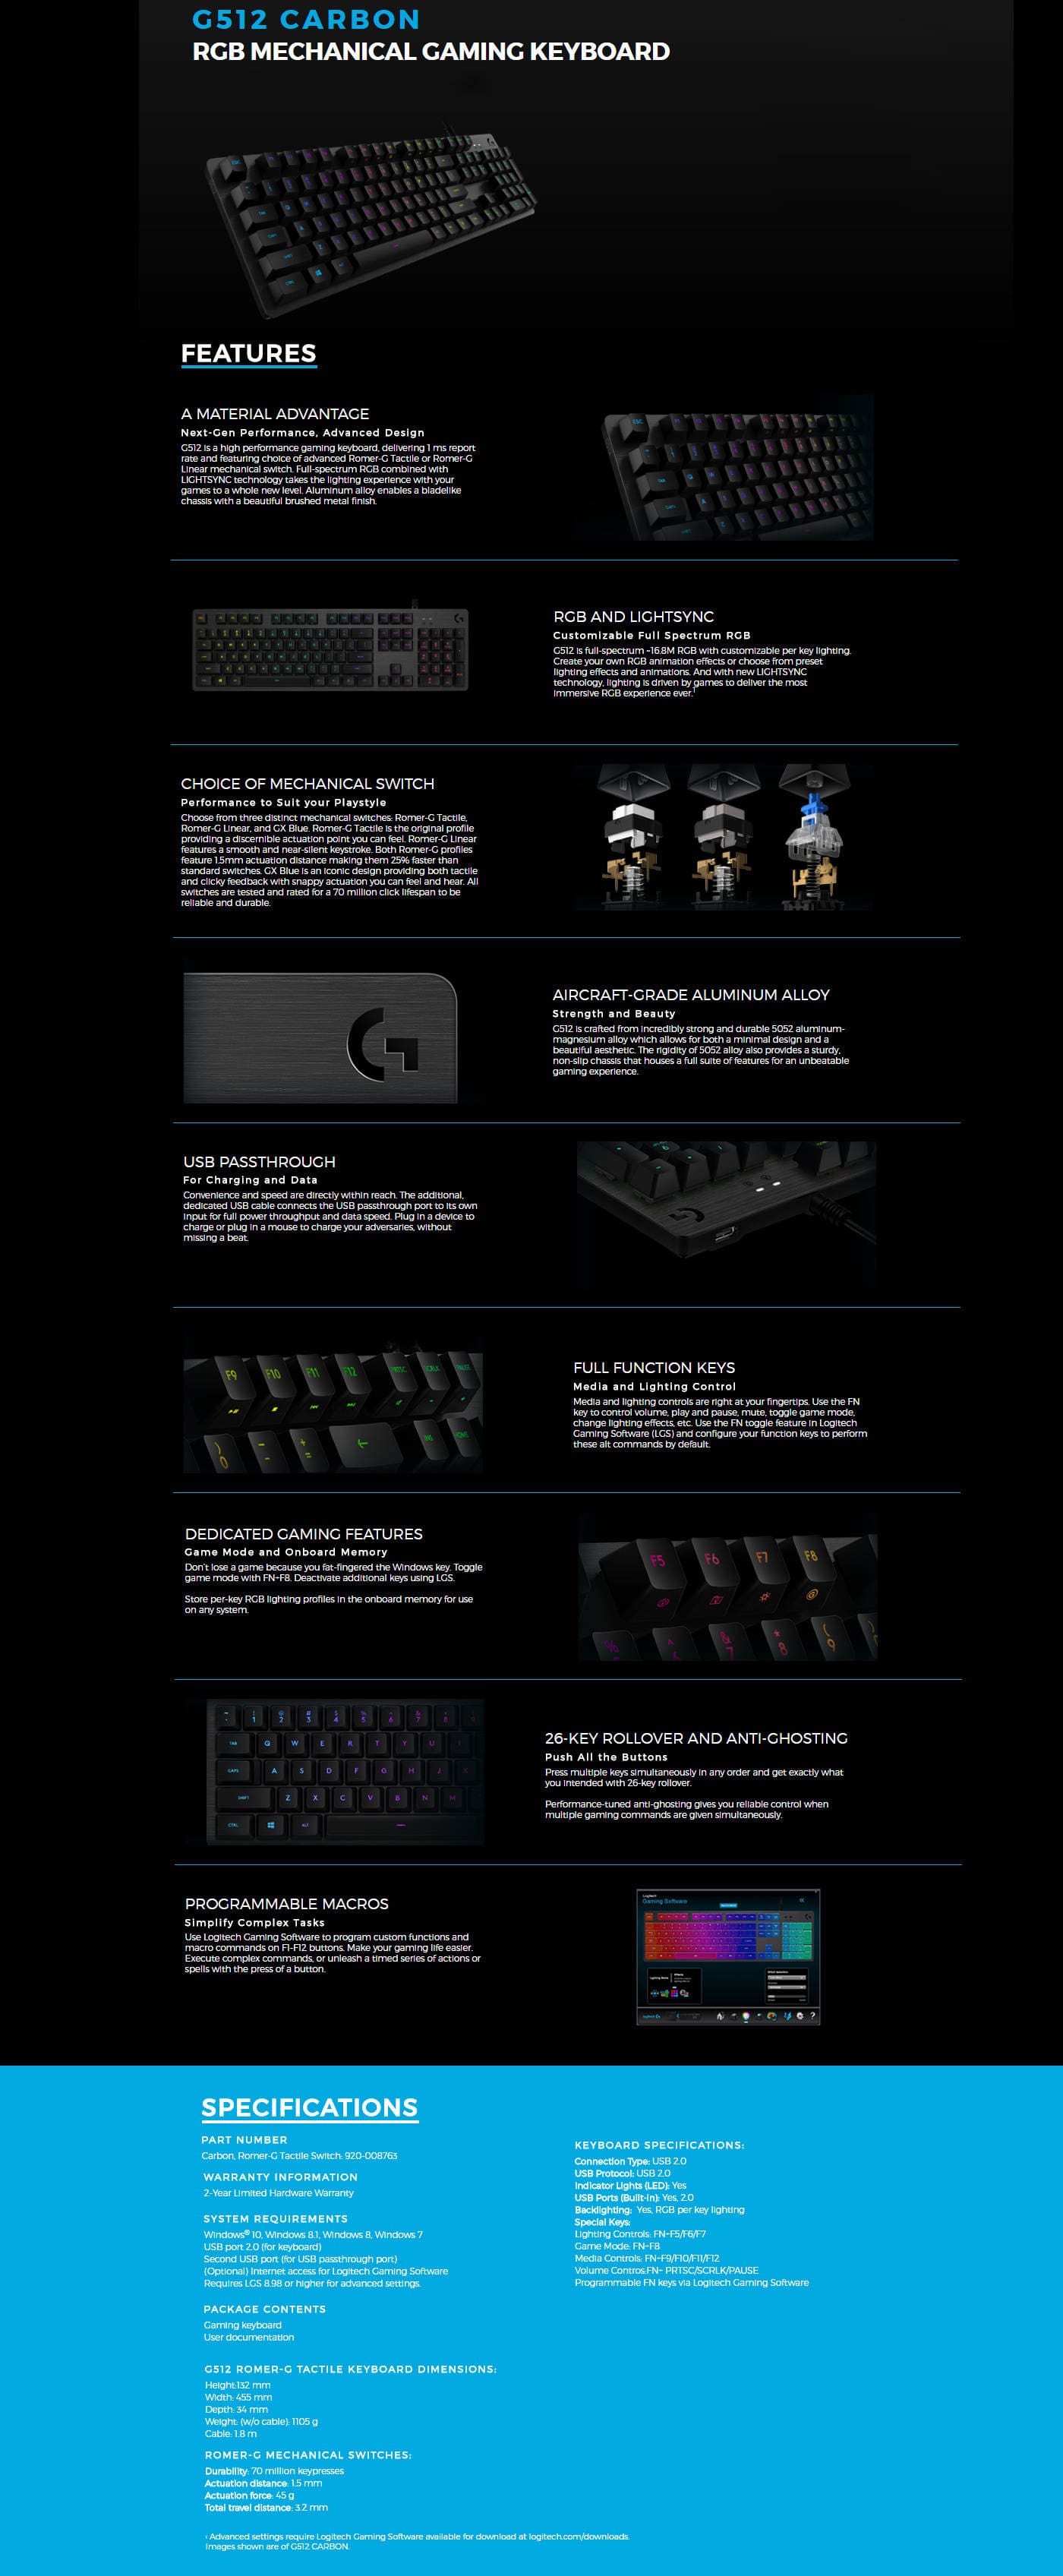  Buy Online Logitech G512 Carbon RGB Mechanical Gaming Keyboard - Romer-G Tactile Switch (920-008763)